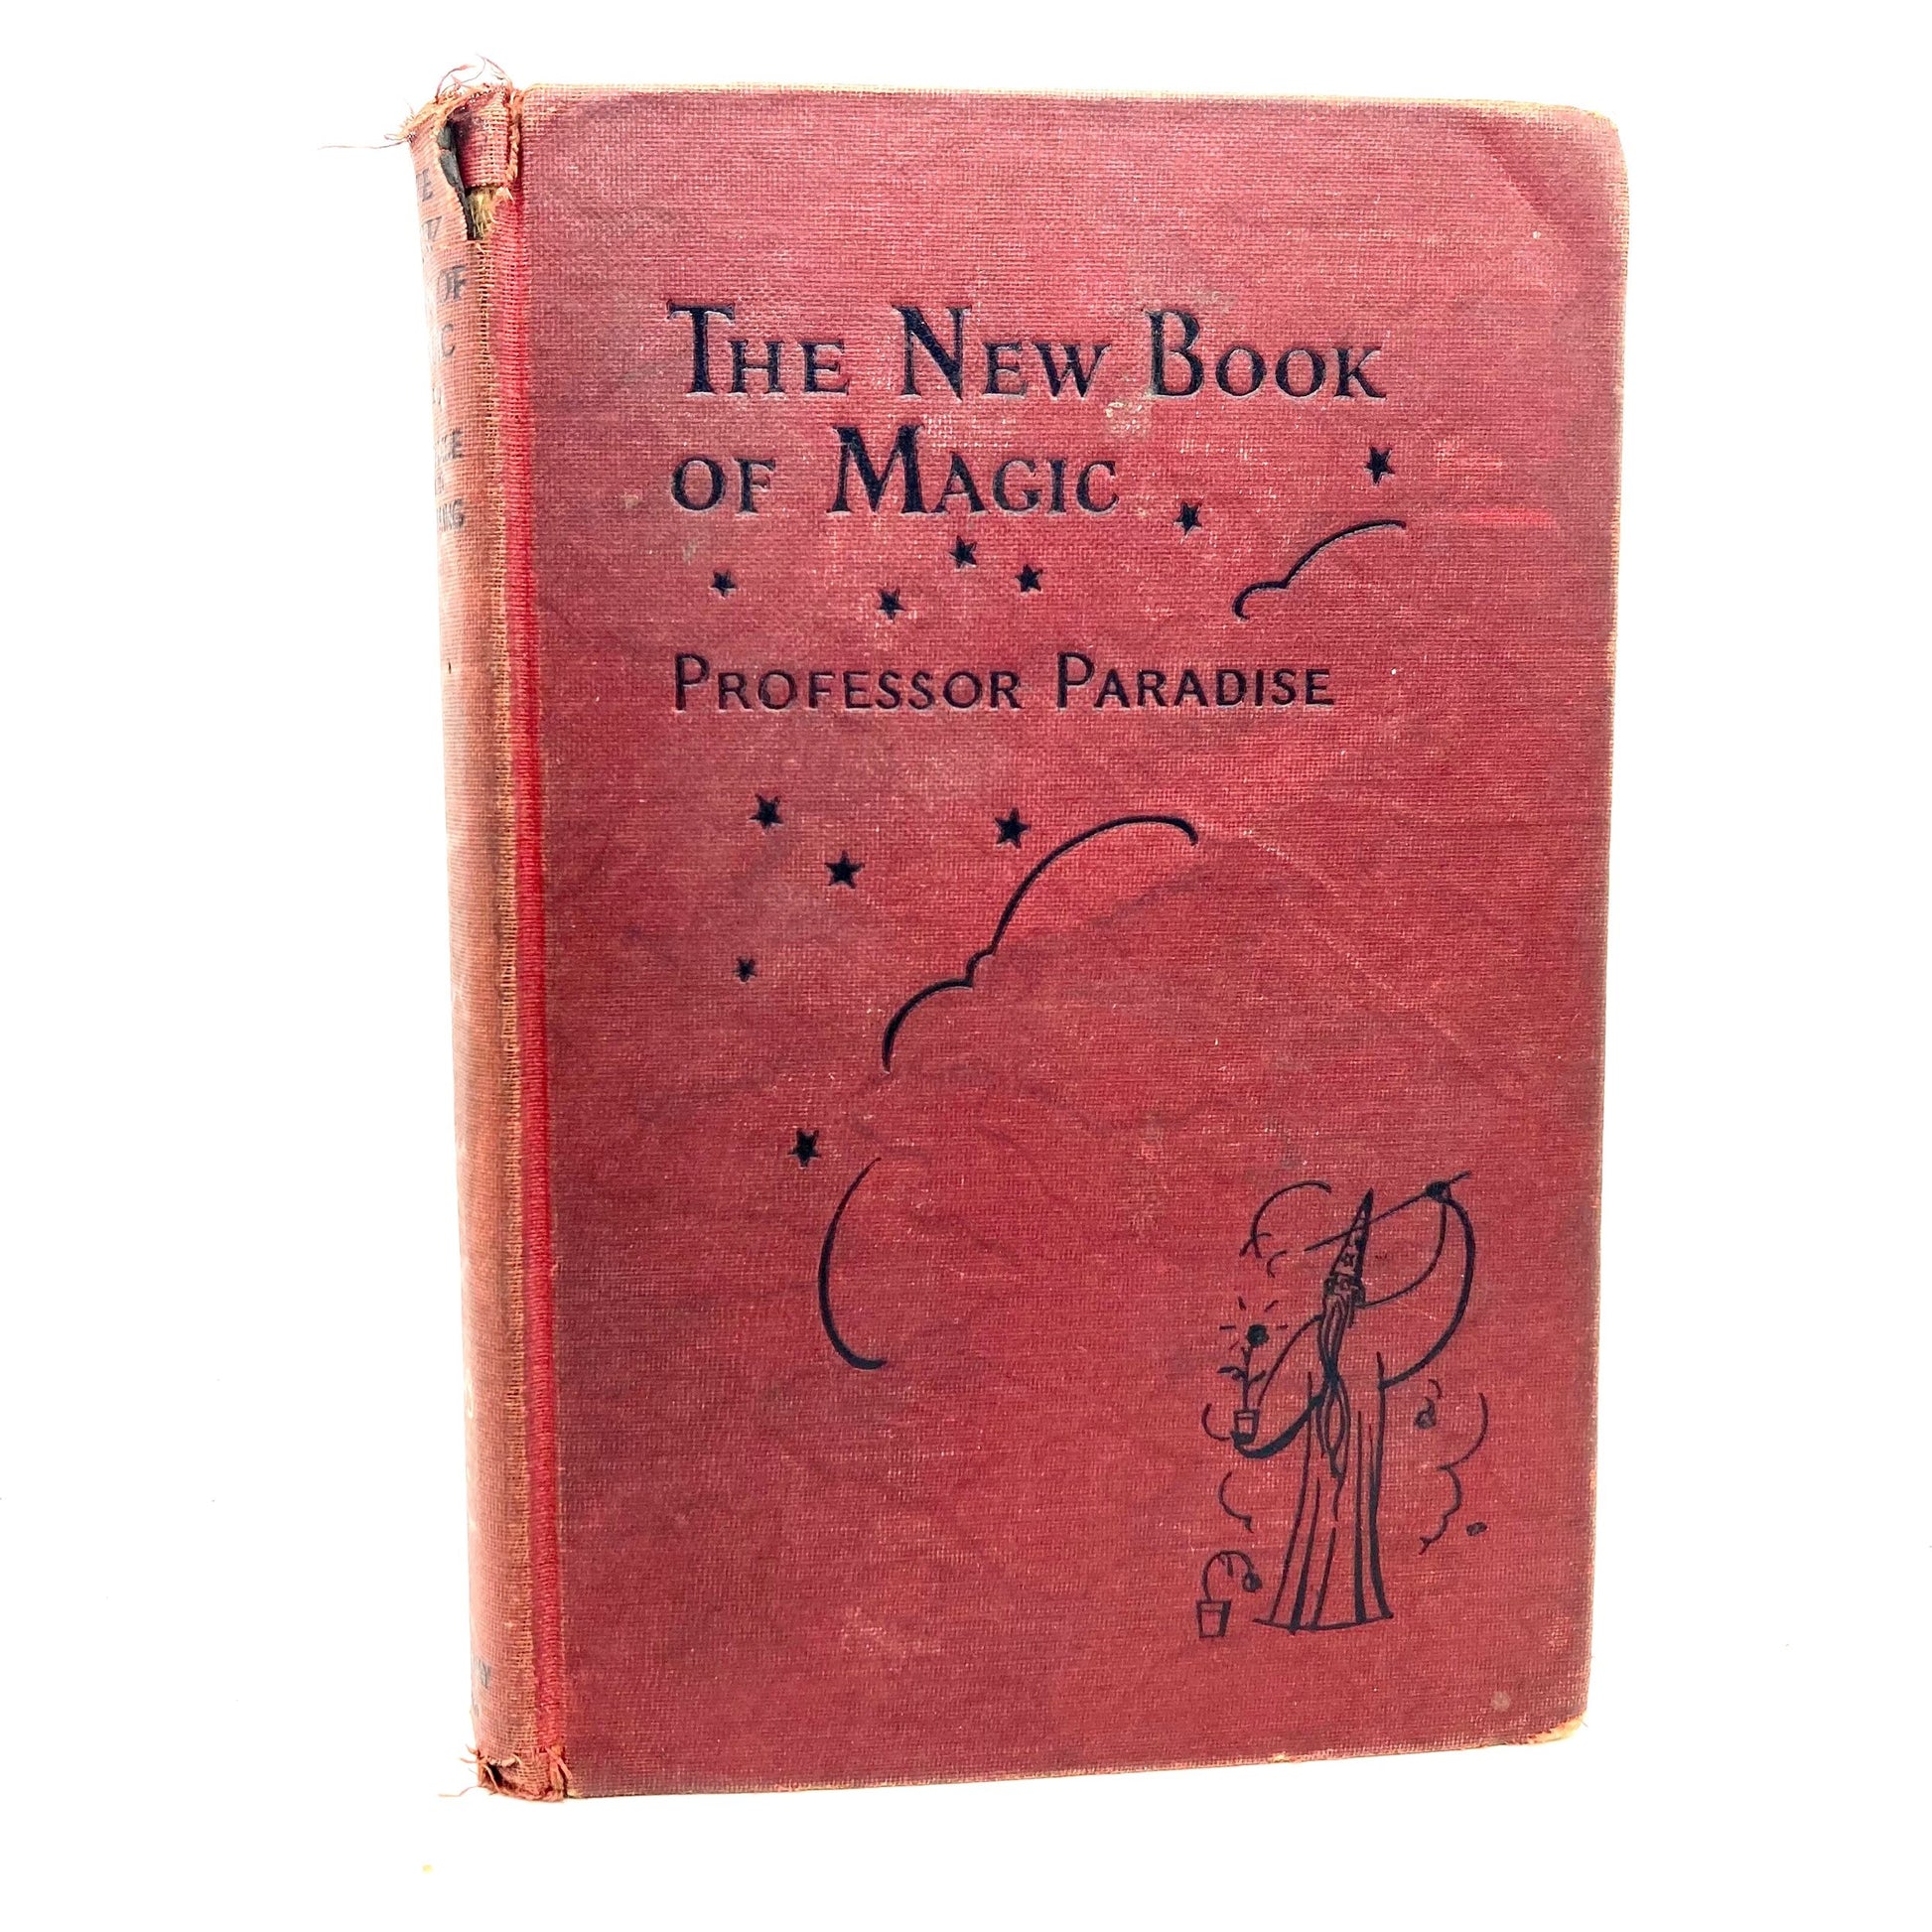 LEEMING, Joseph "The New Book of Magic" by Professor Paradise [Doubleday, Doran & Co, 1939] - Buzz Bookstore